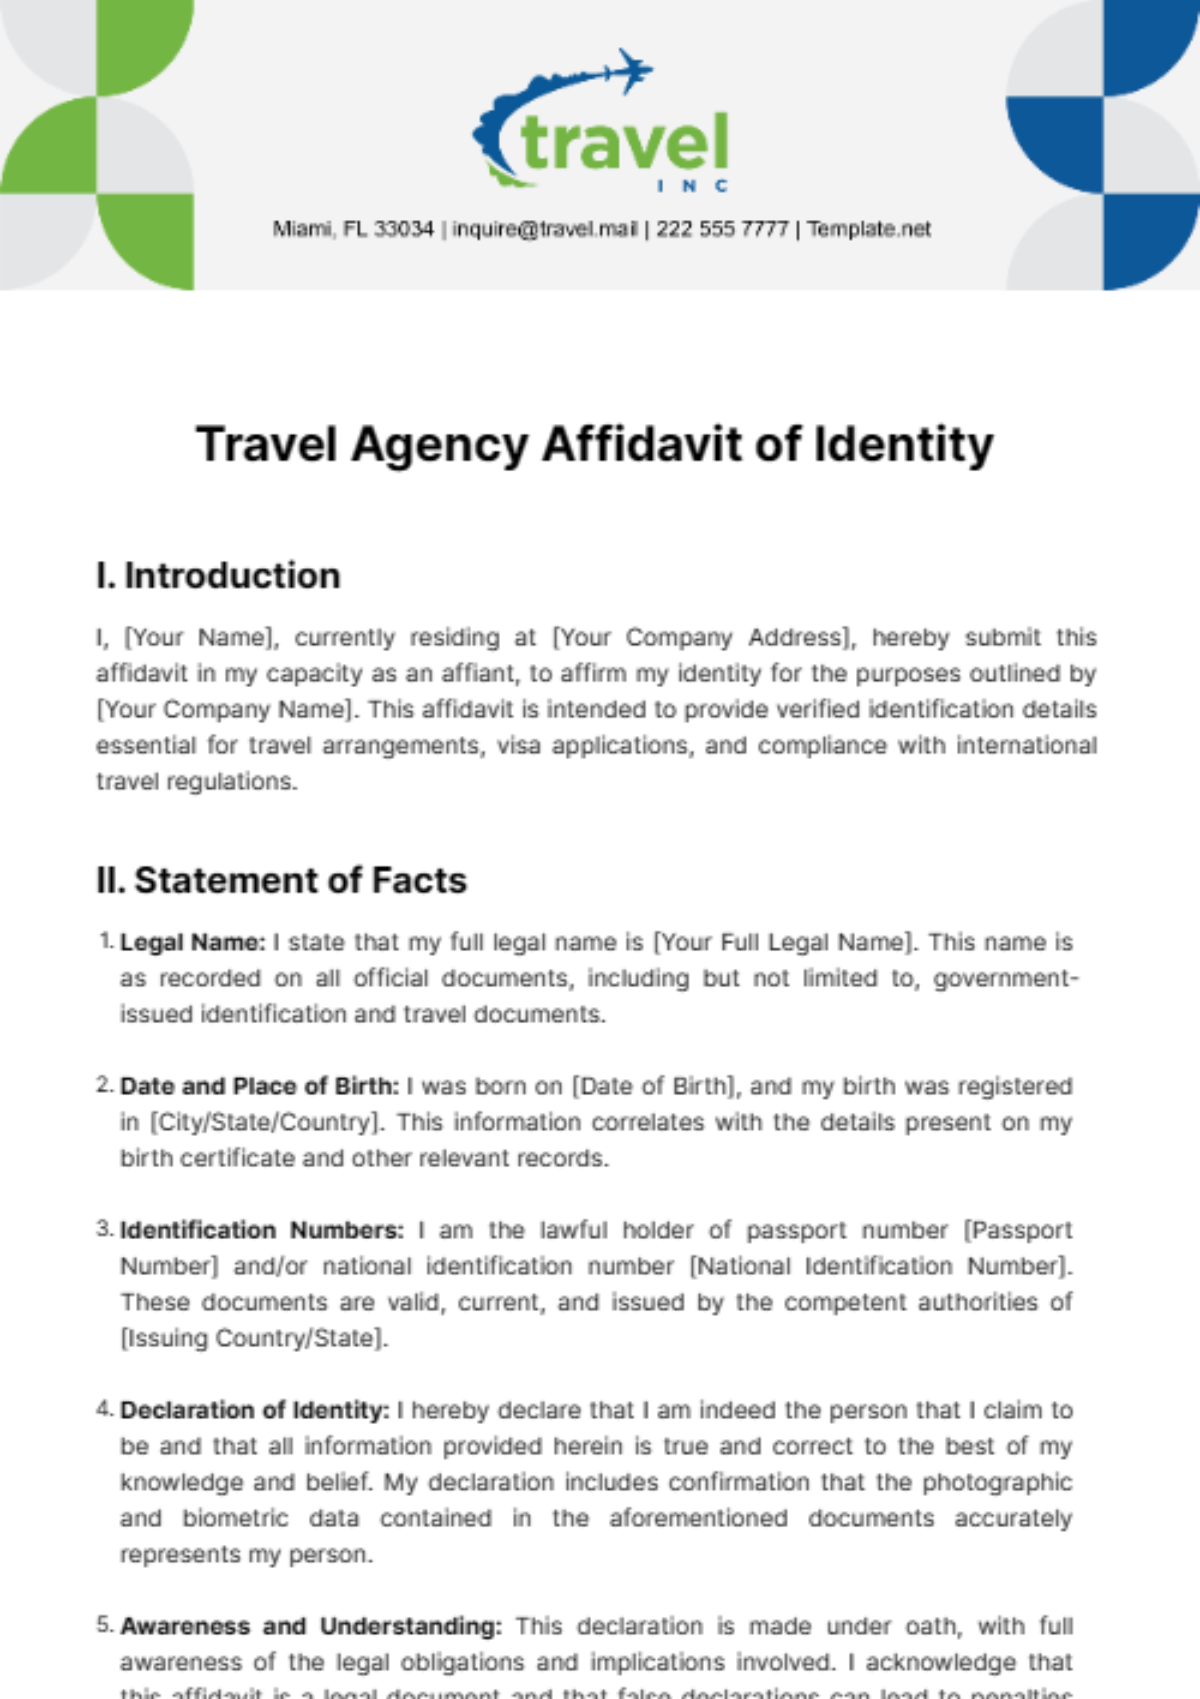 Travel Agency Affidavit of Identity Template